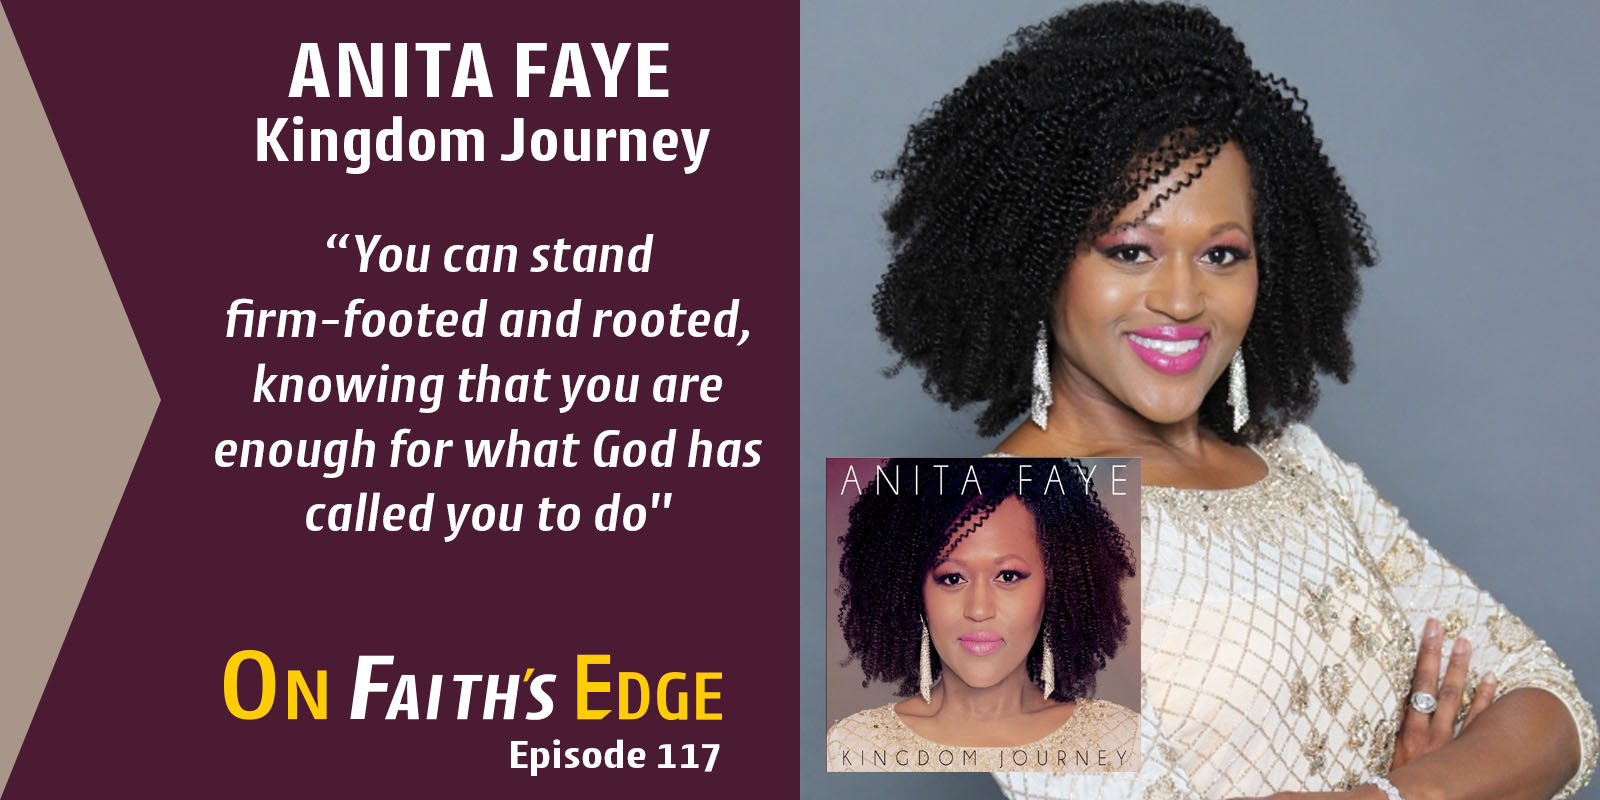 Traveling a Kingdom Journey with Award-Winning Singer-Songwriter Anita Faye